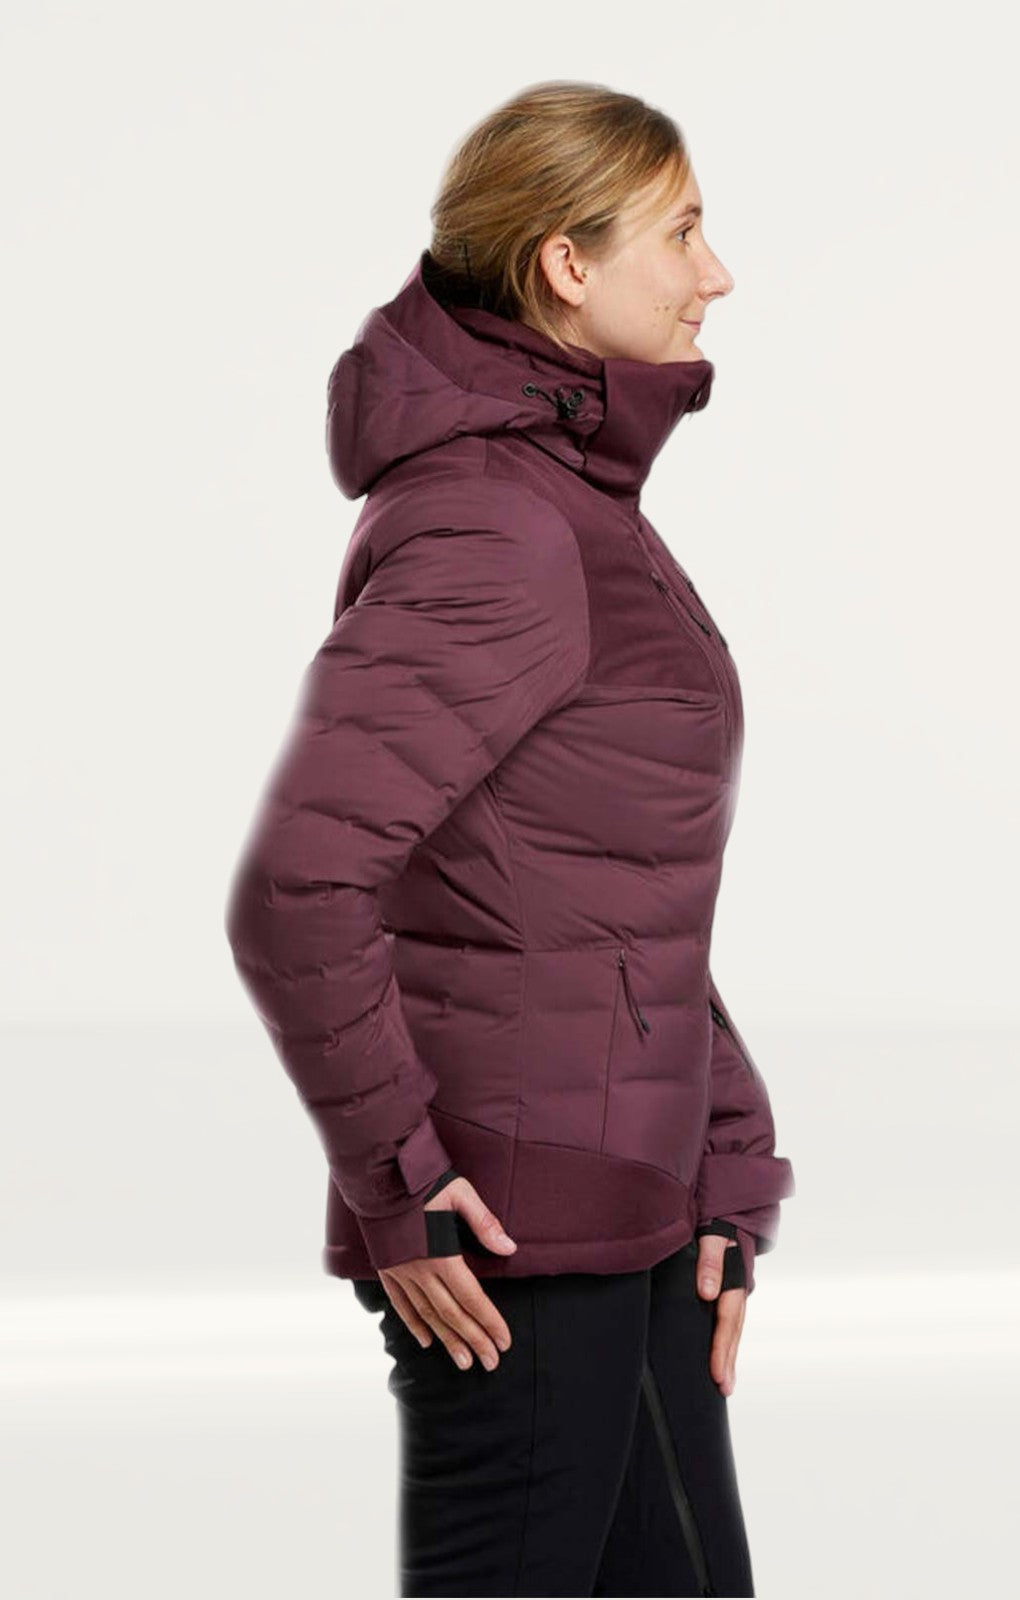 Decathlon Maroon Women's Piste Ski Jacket product image